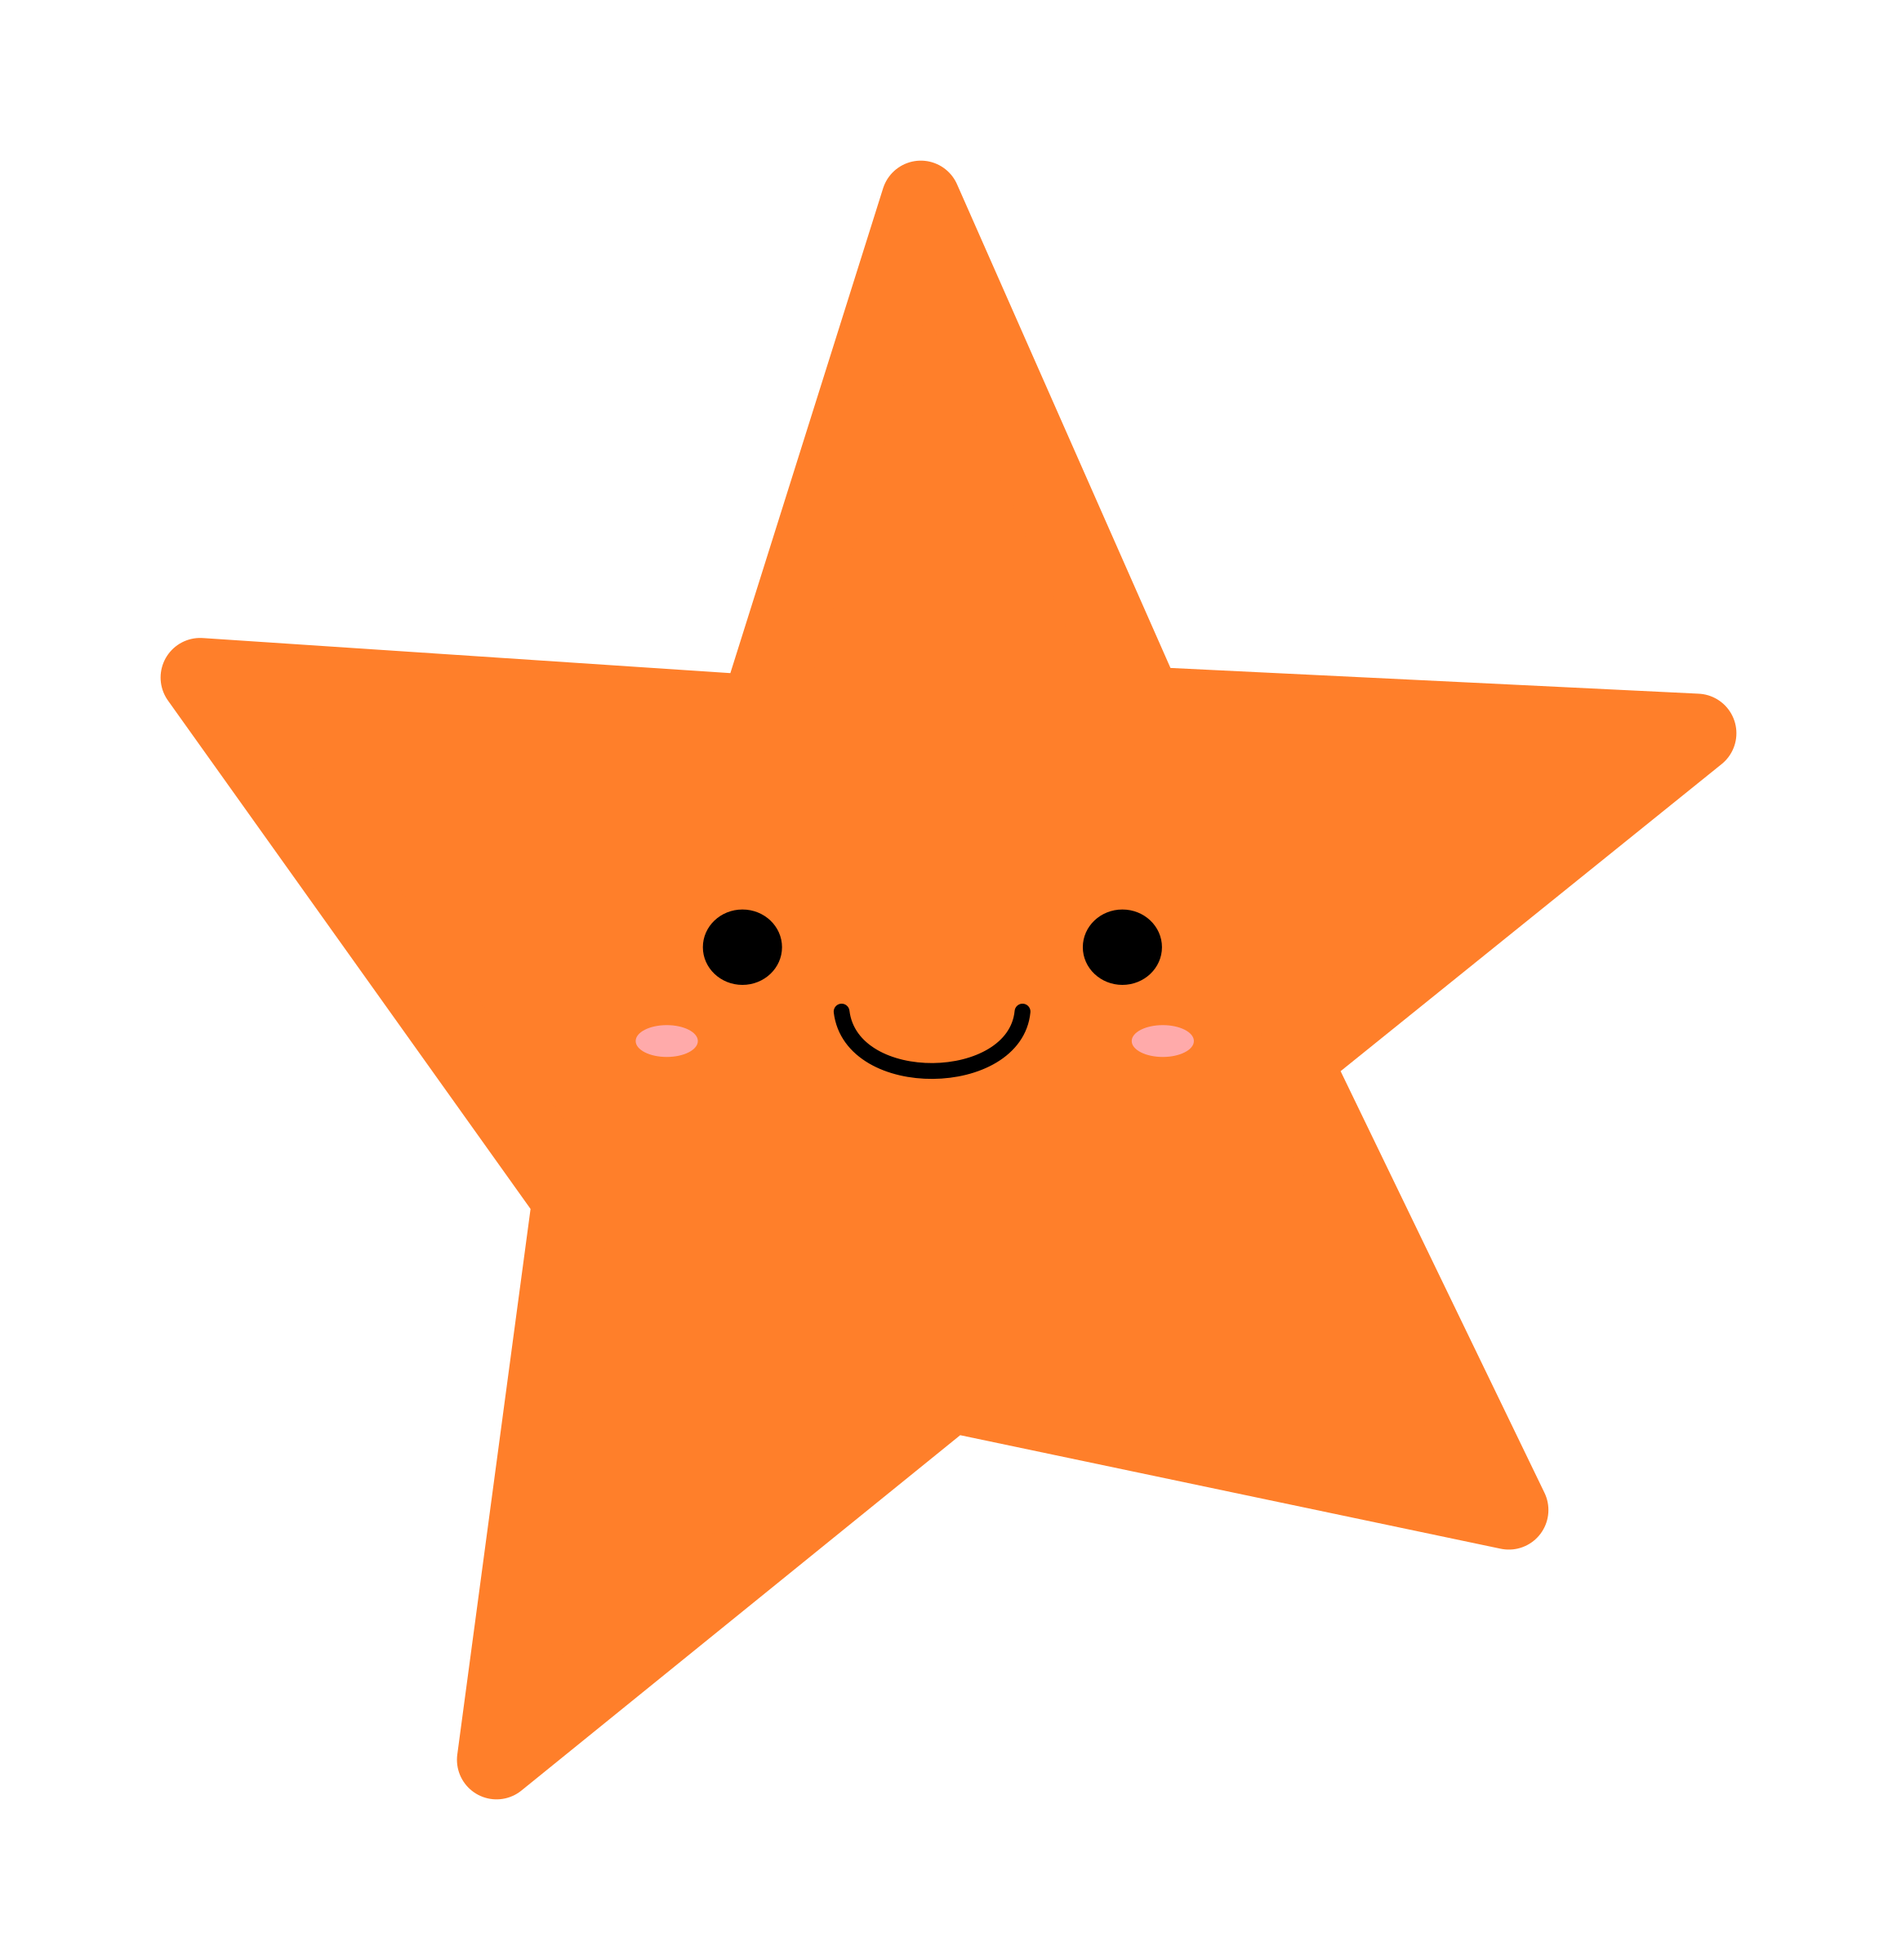 Orange Star vector clipart image.